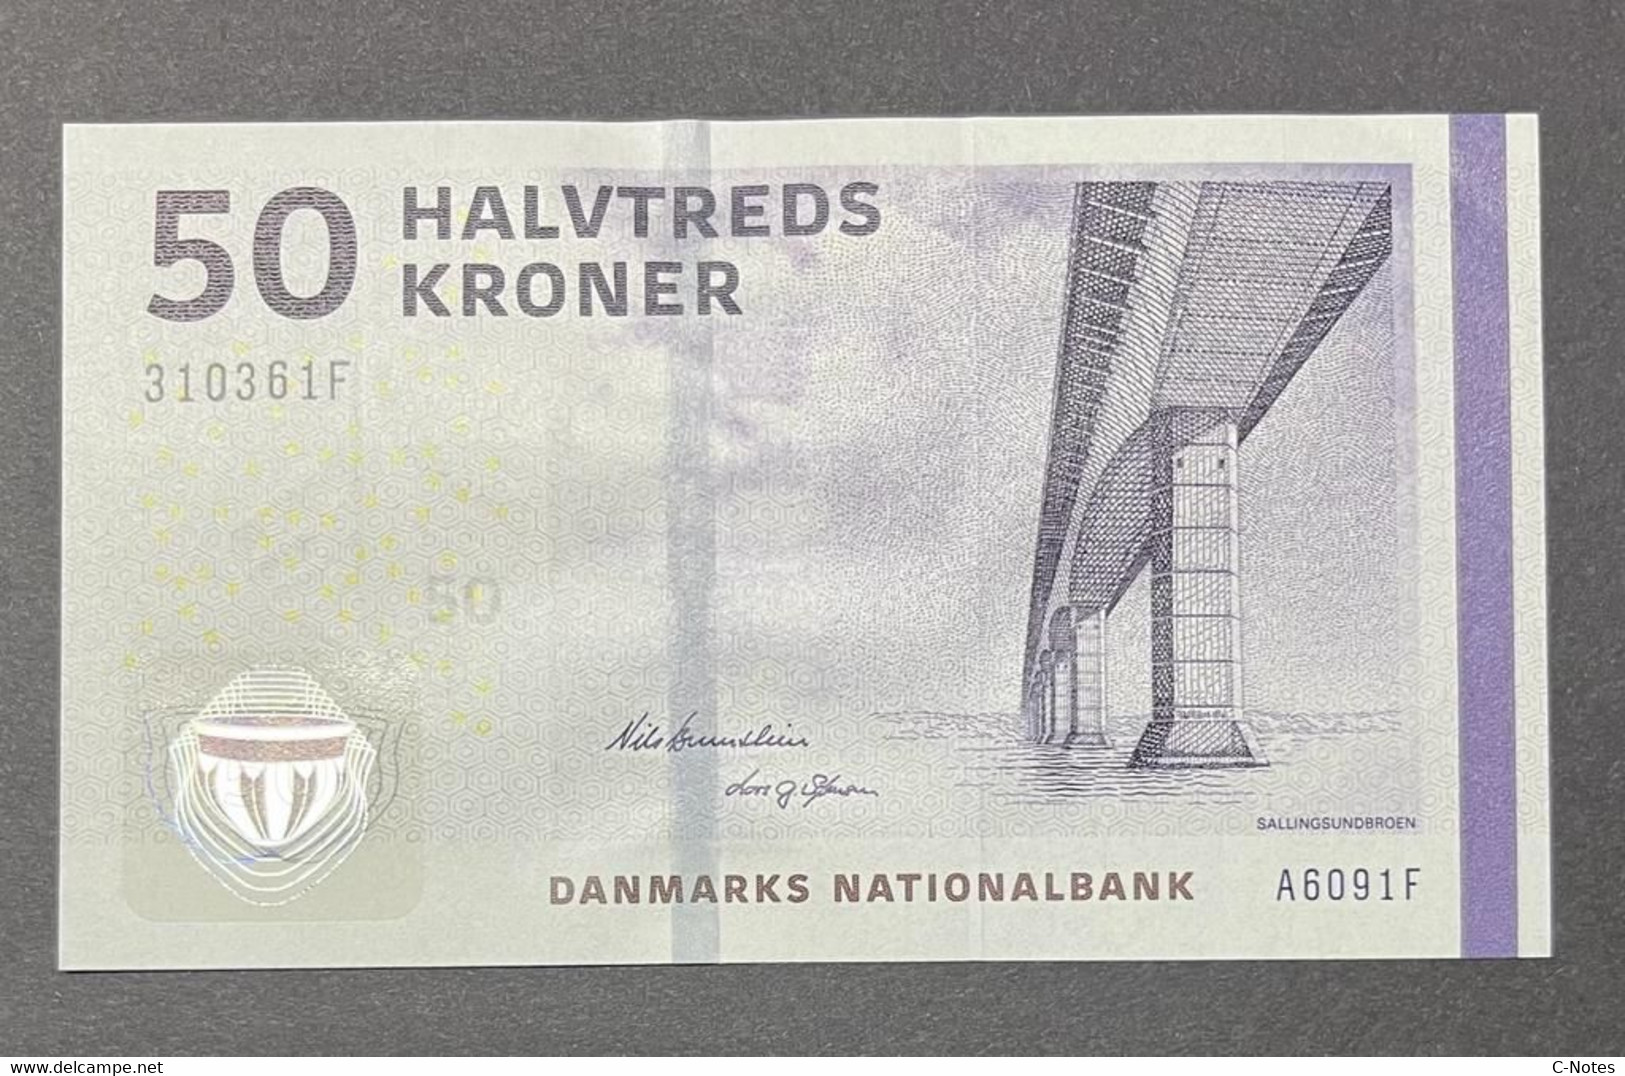 DENMARK - P.65a – 50 Kroner 2009 UNC, Serie A6091F 310361F - Danemark